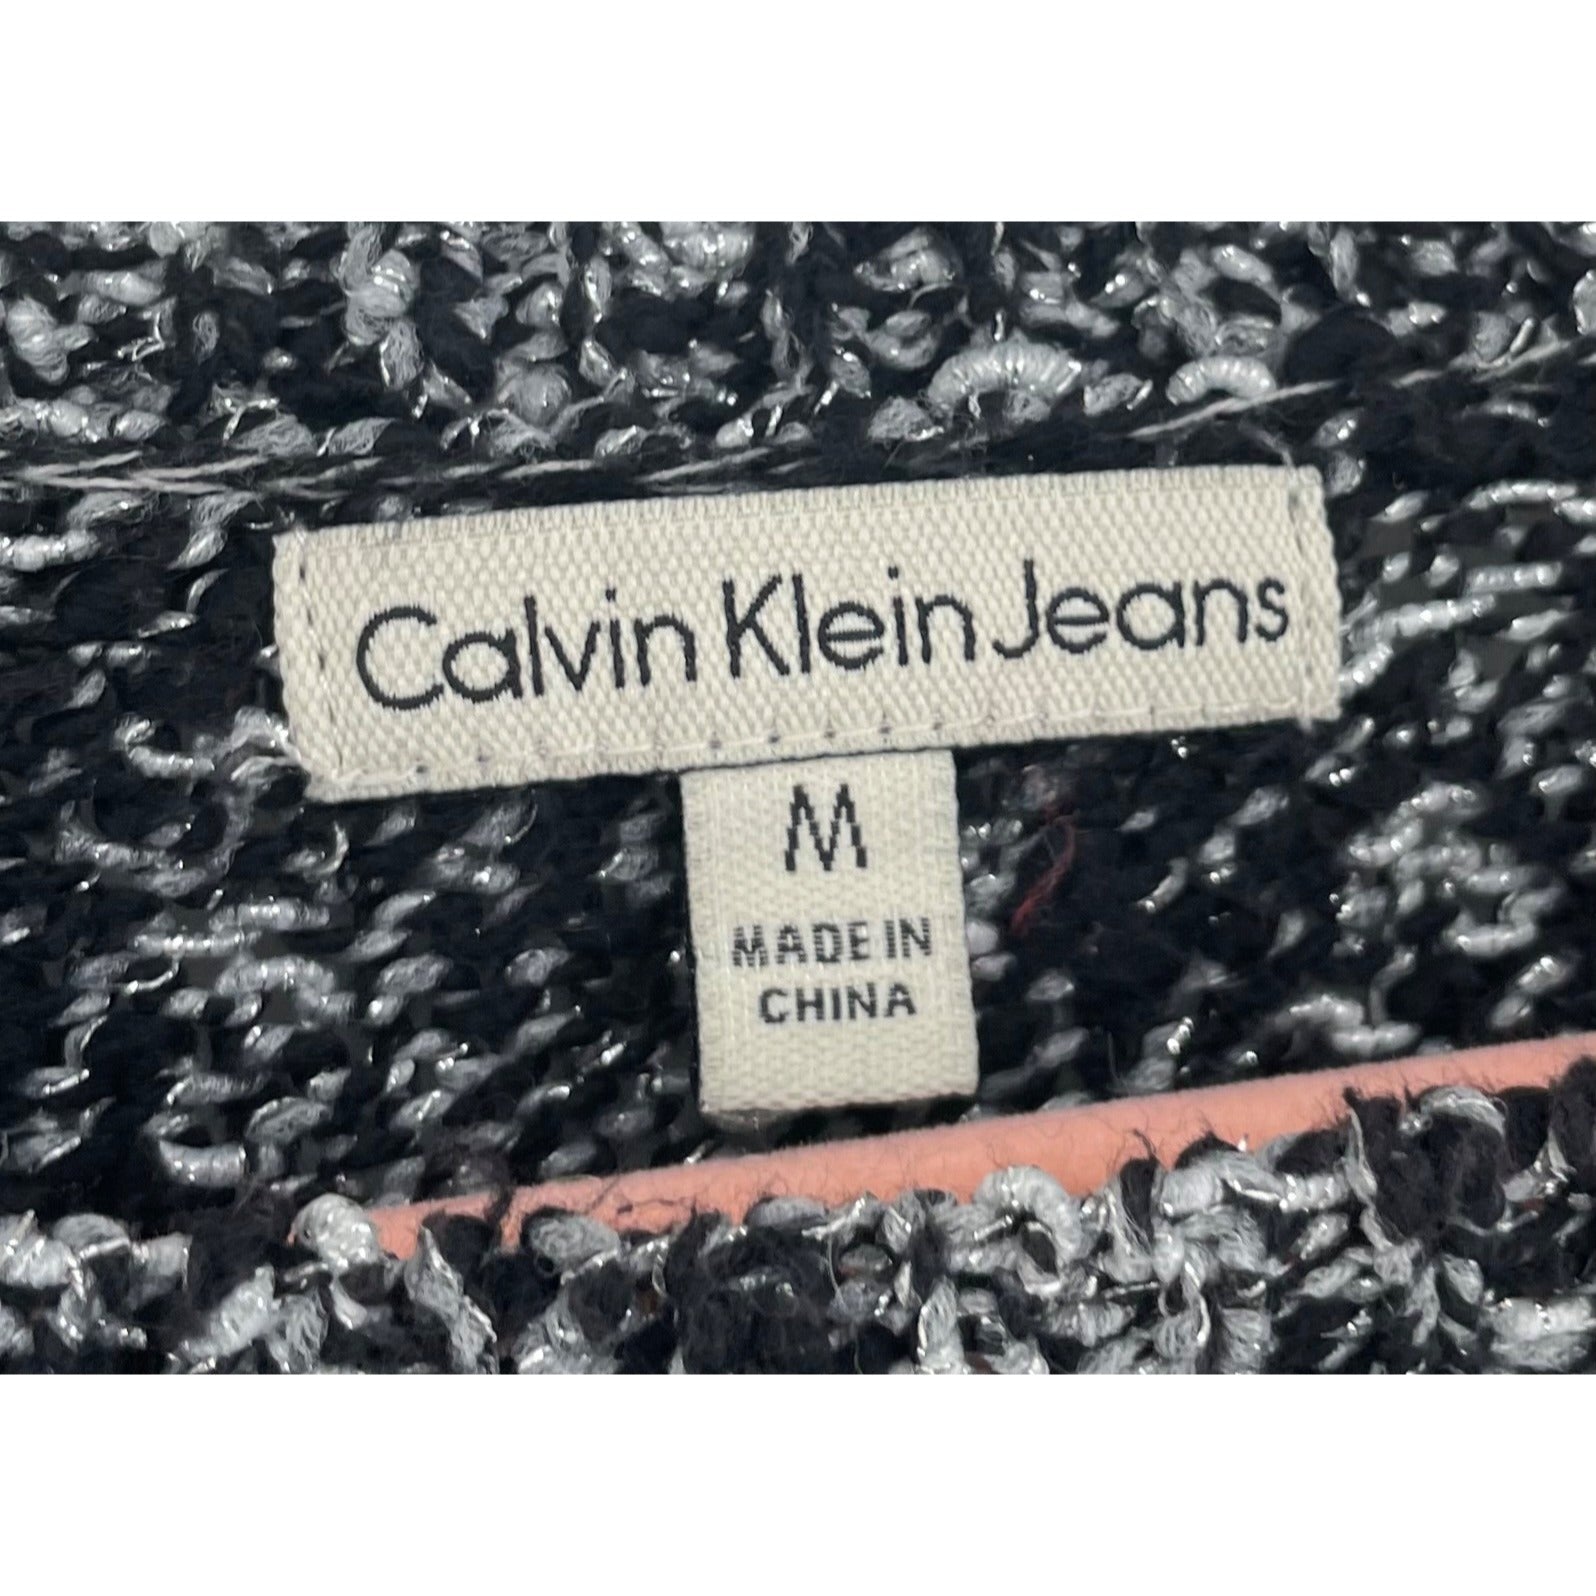 Calvin Klein Jeans Women's Size Medium Grey/Black/Silver Metallic Knit Sweater